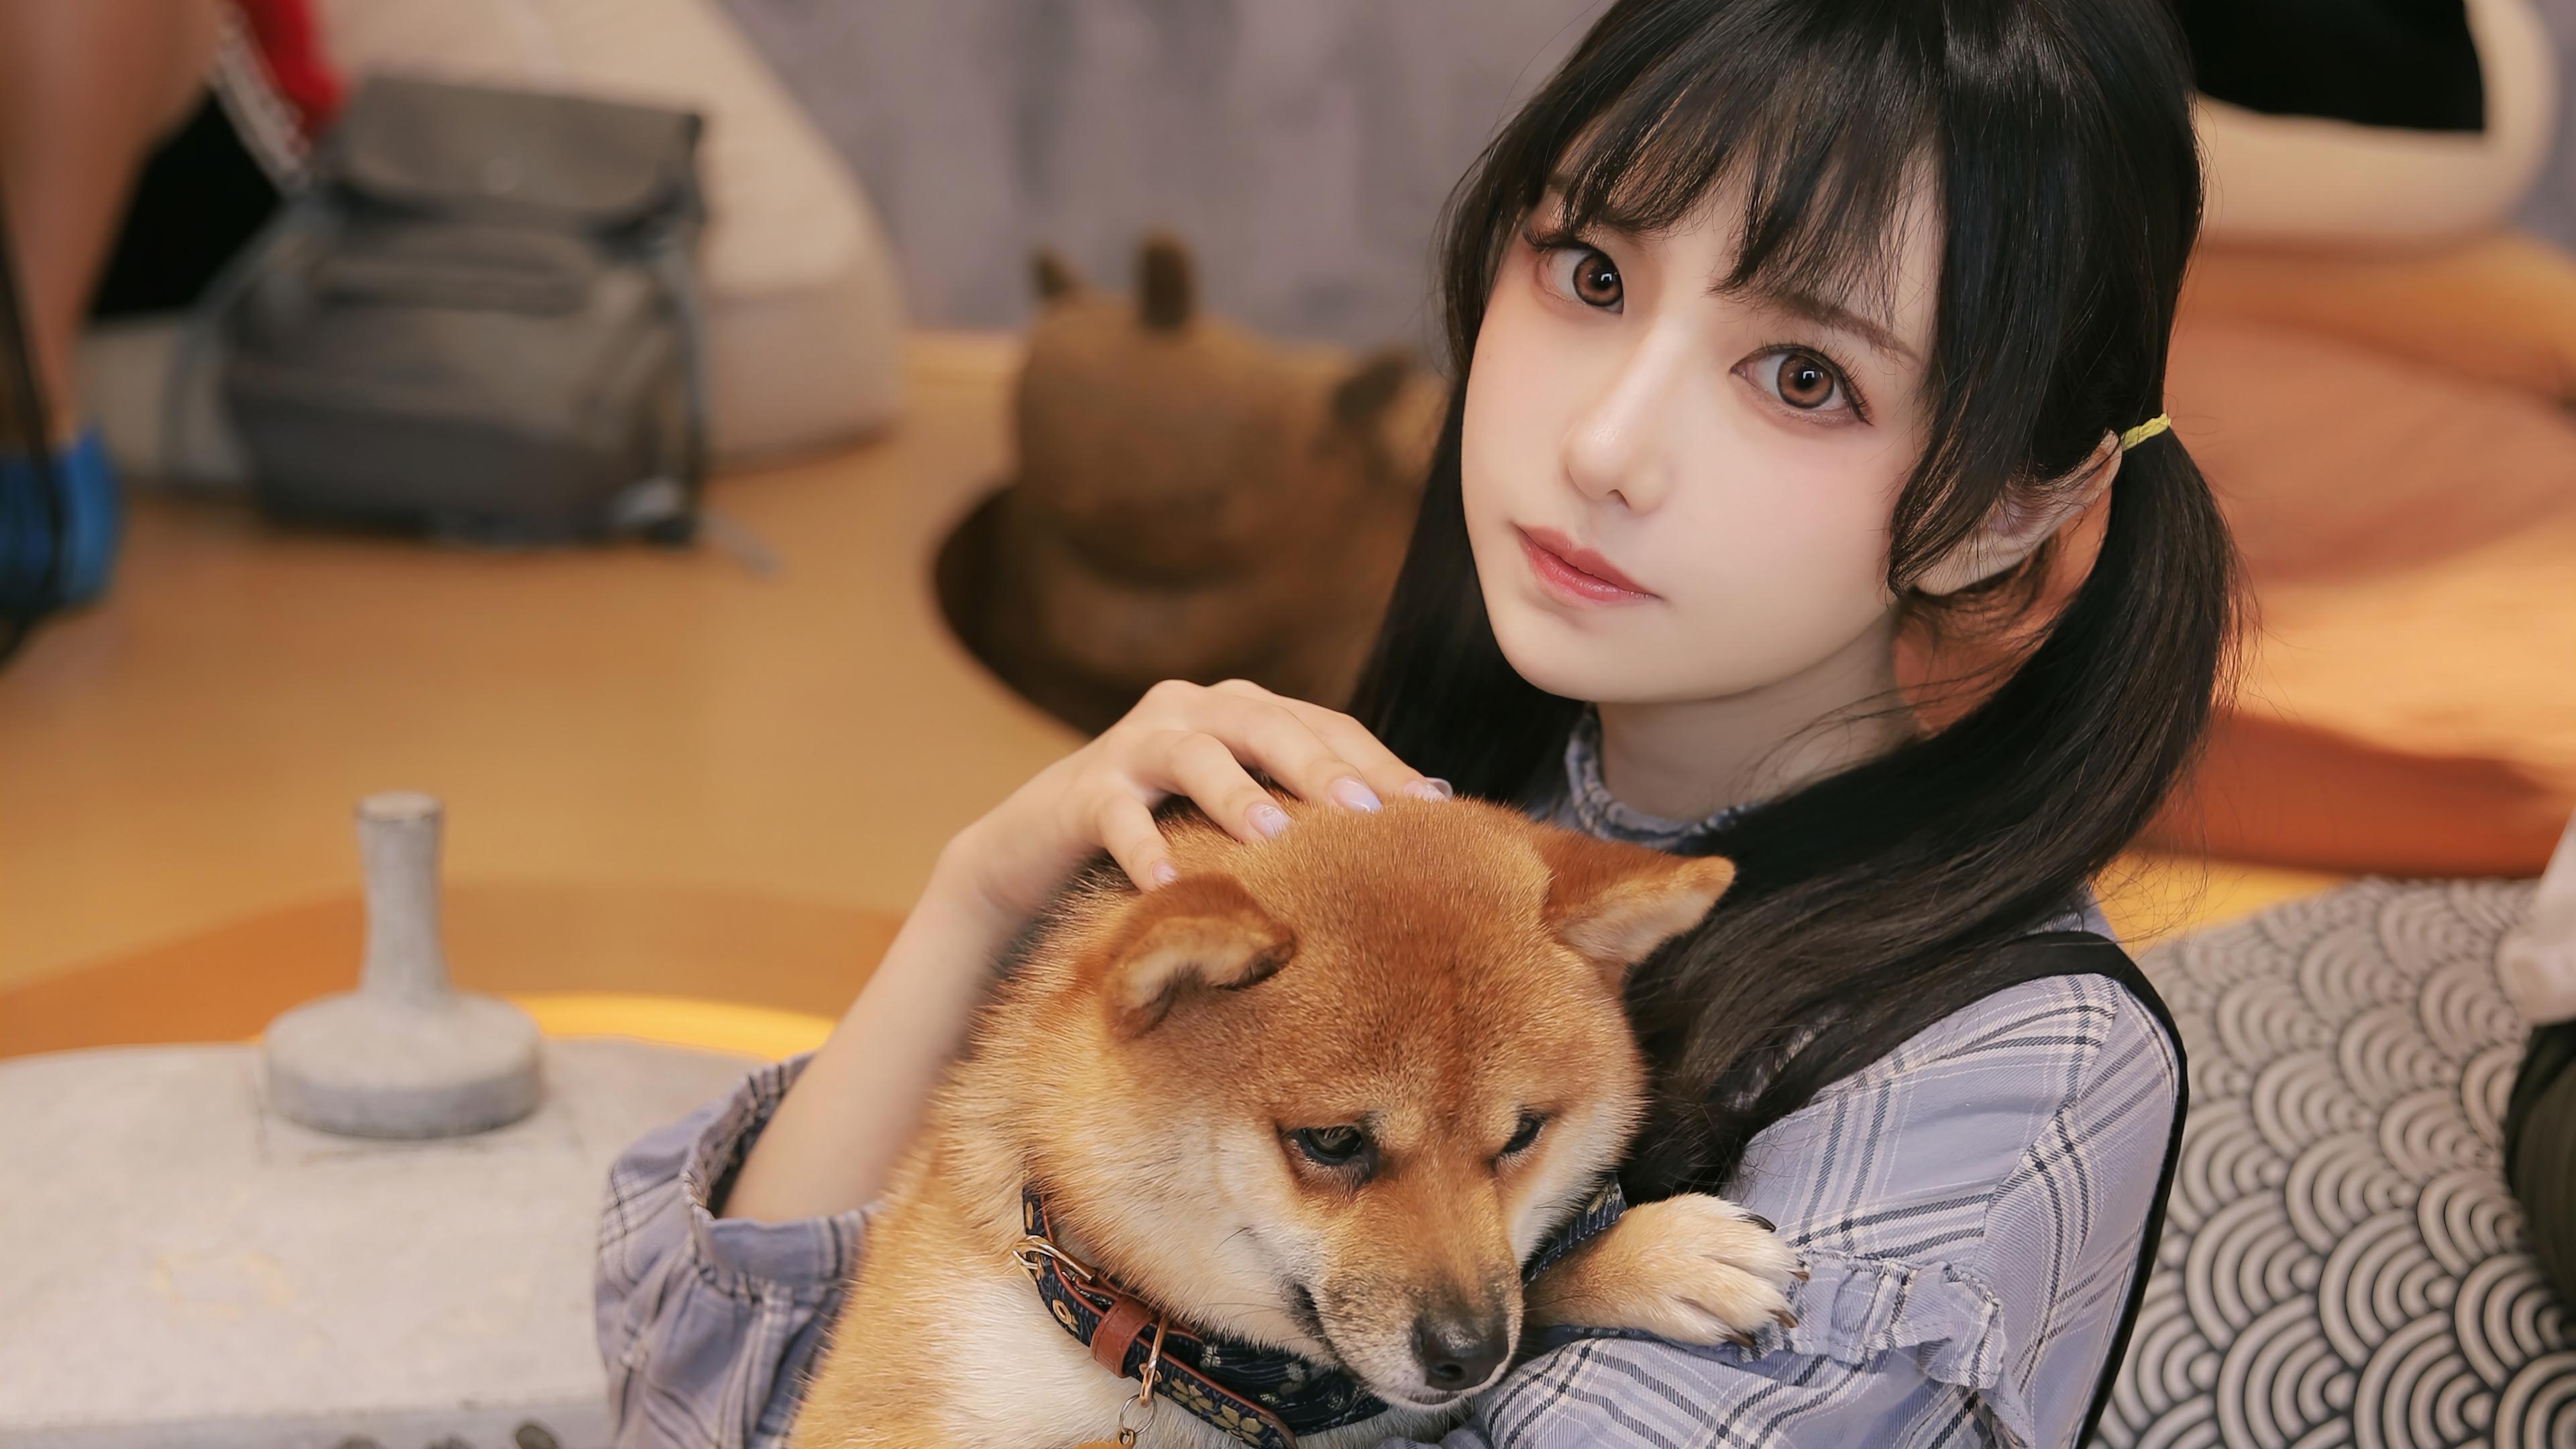 HD wallpaper, Dog, Shiba Inu, Girl, With Japanese, 4K, Hd, Cute, Asian, Wallpaper